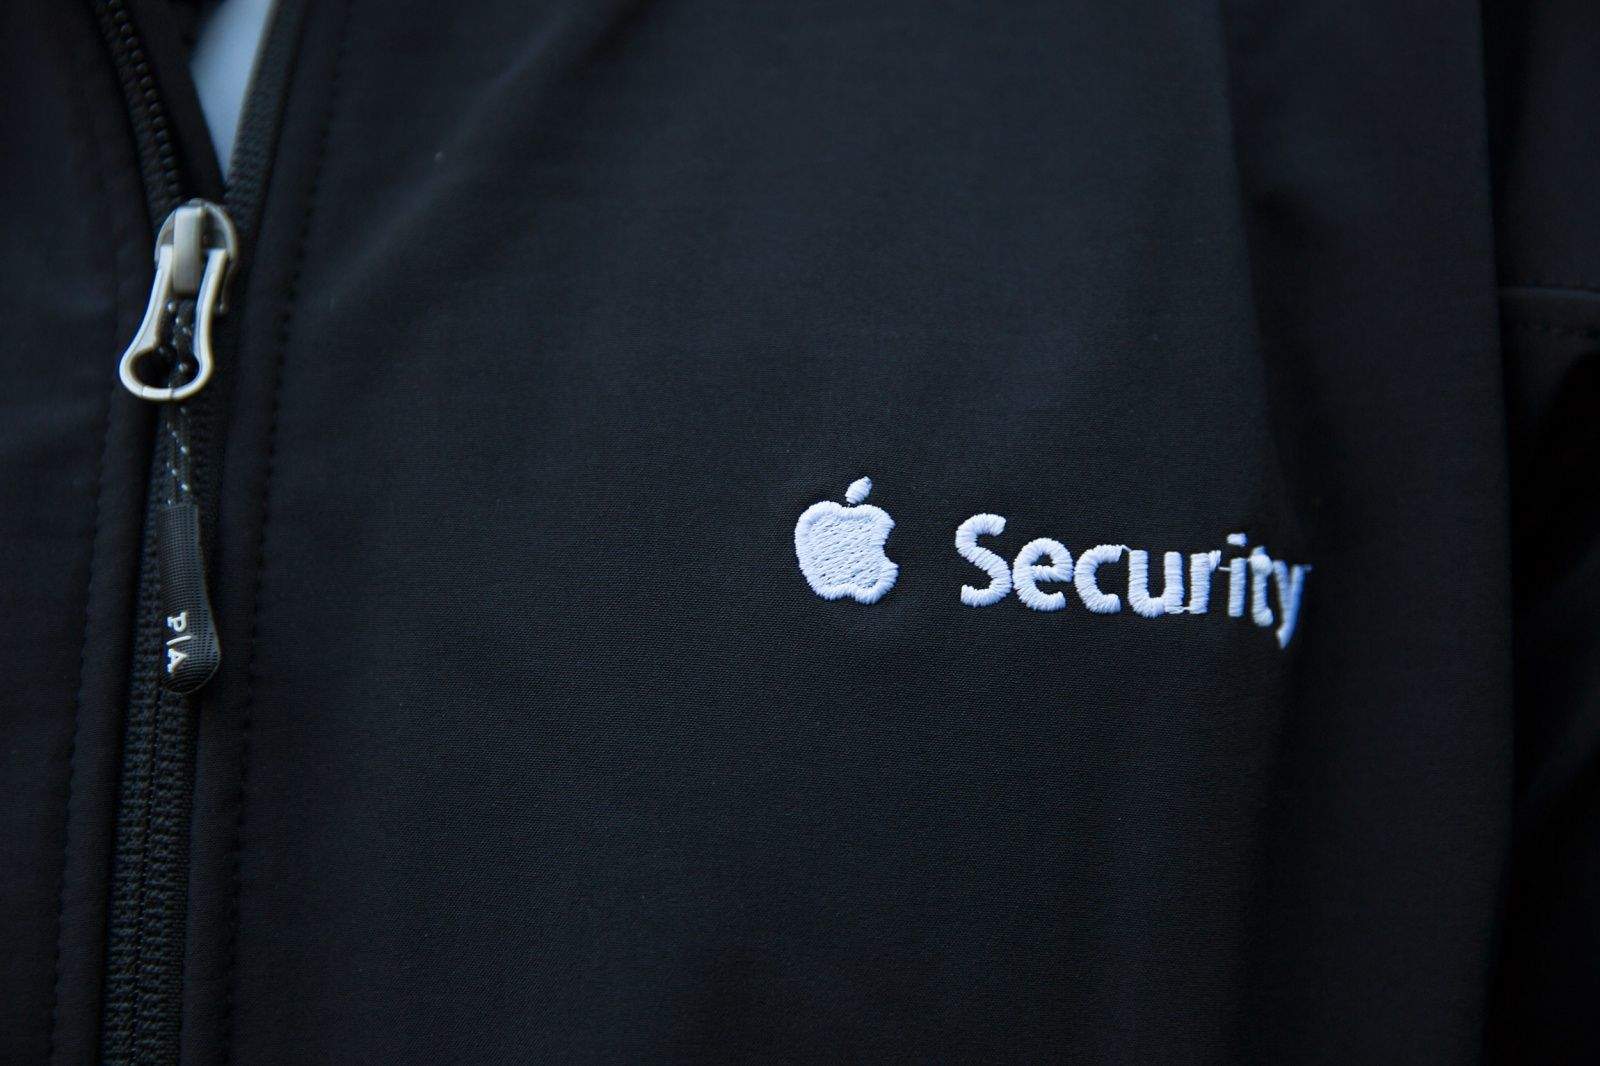 Mac Security App Store